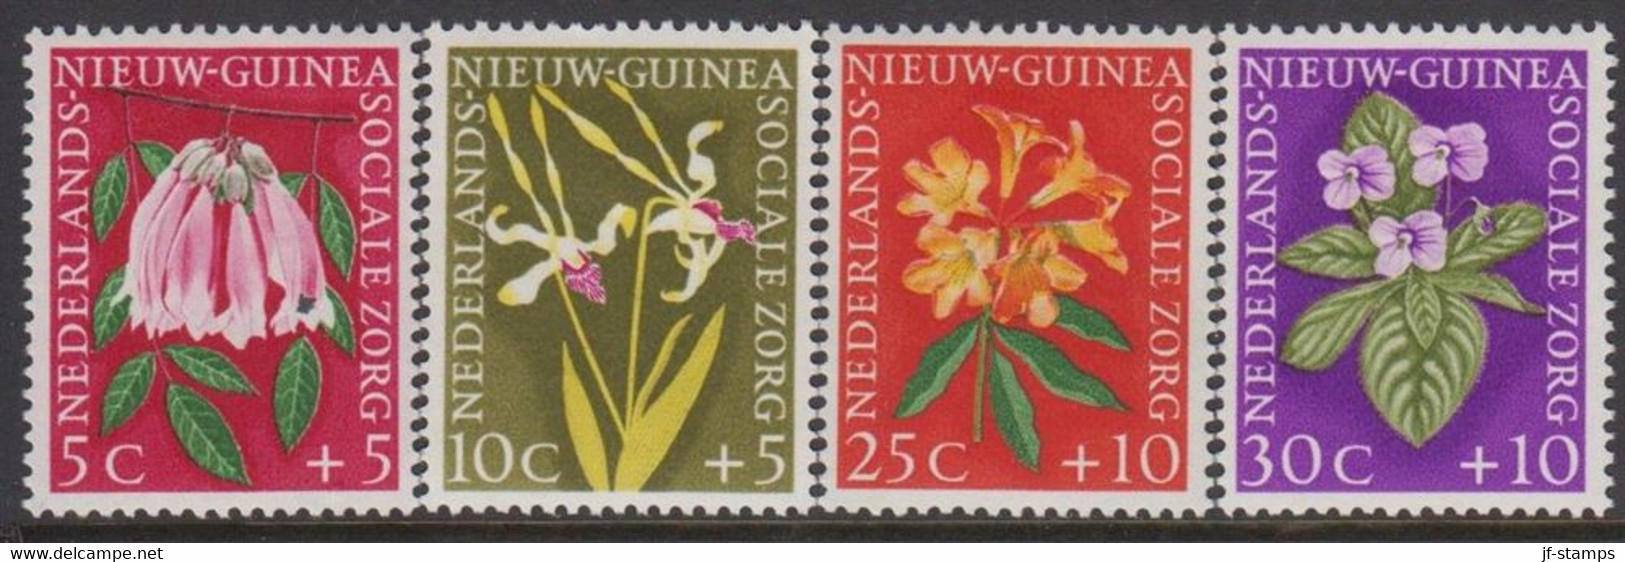 1959. NIEUW GUINEA. Flowers Complete Set Hinged.  - JF529305 - Netherlands New Guinea